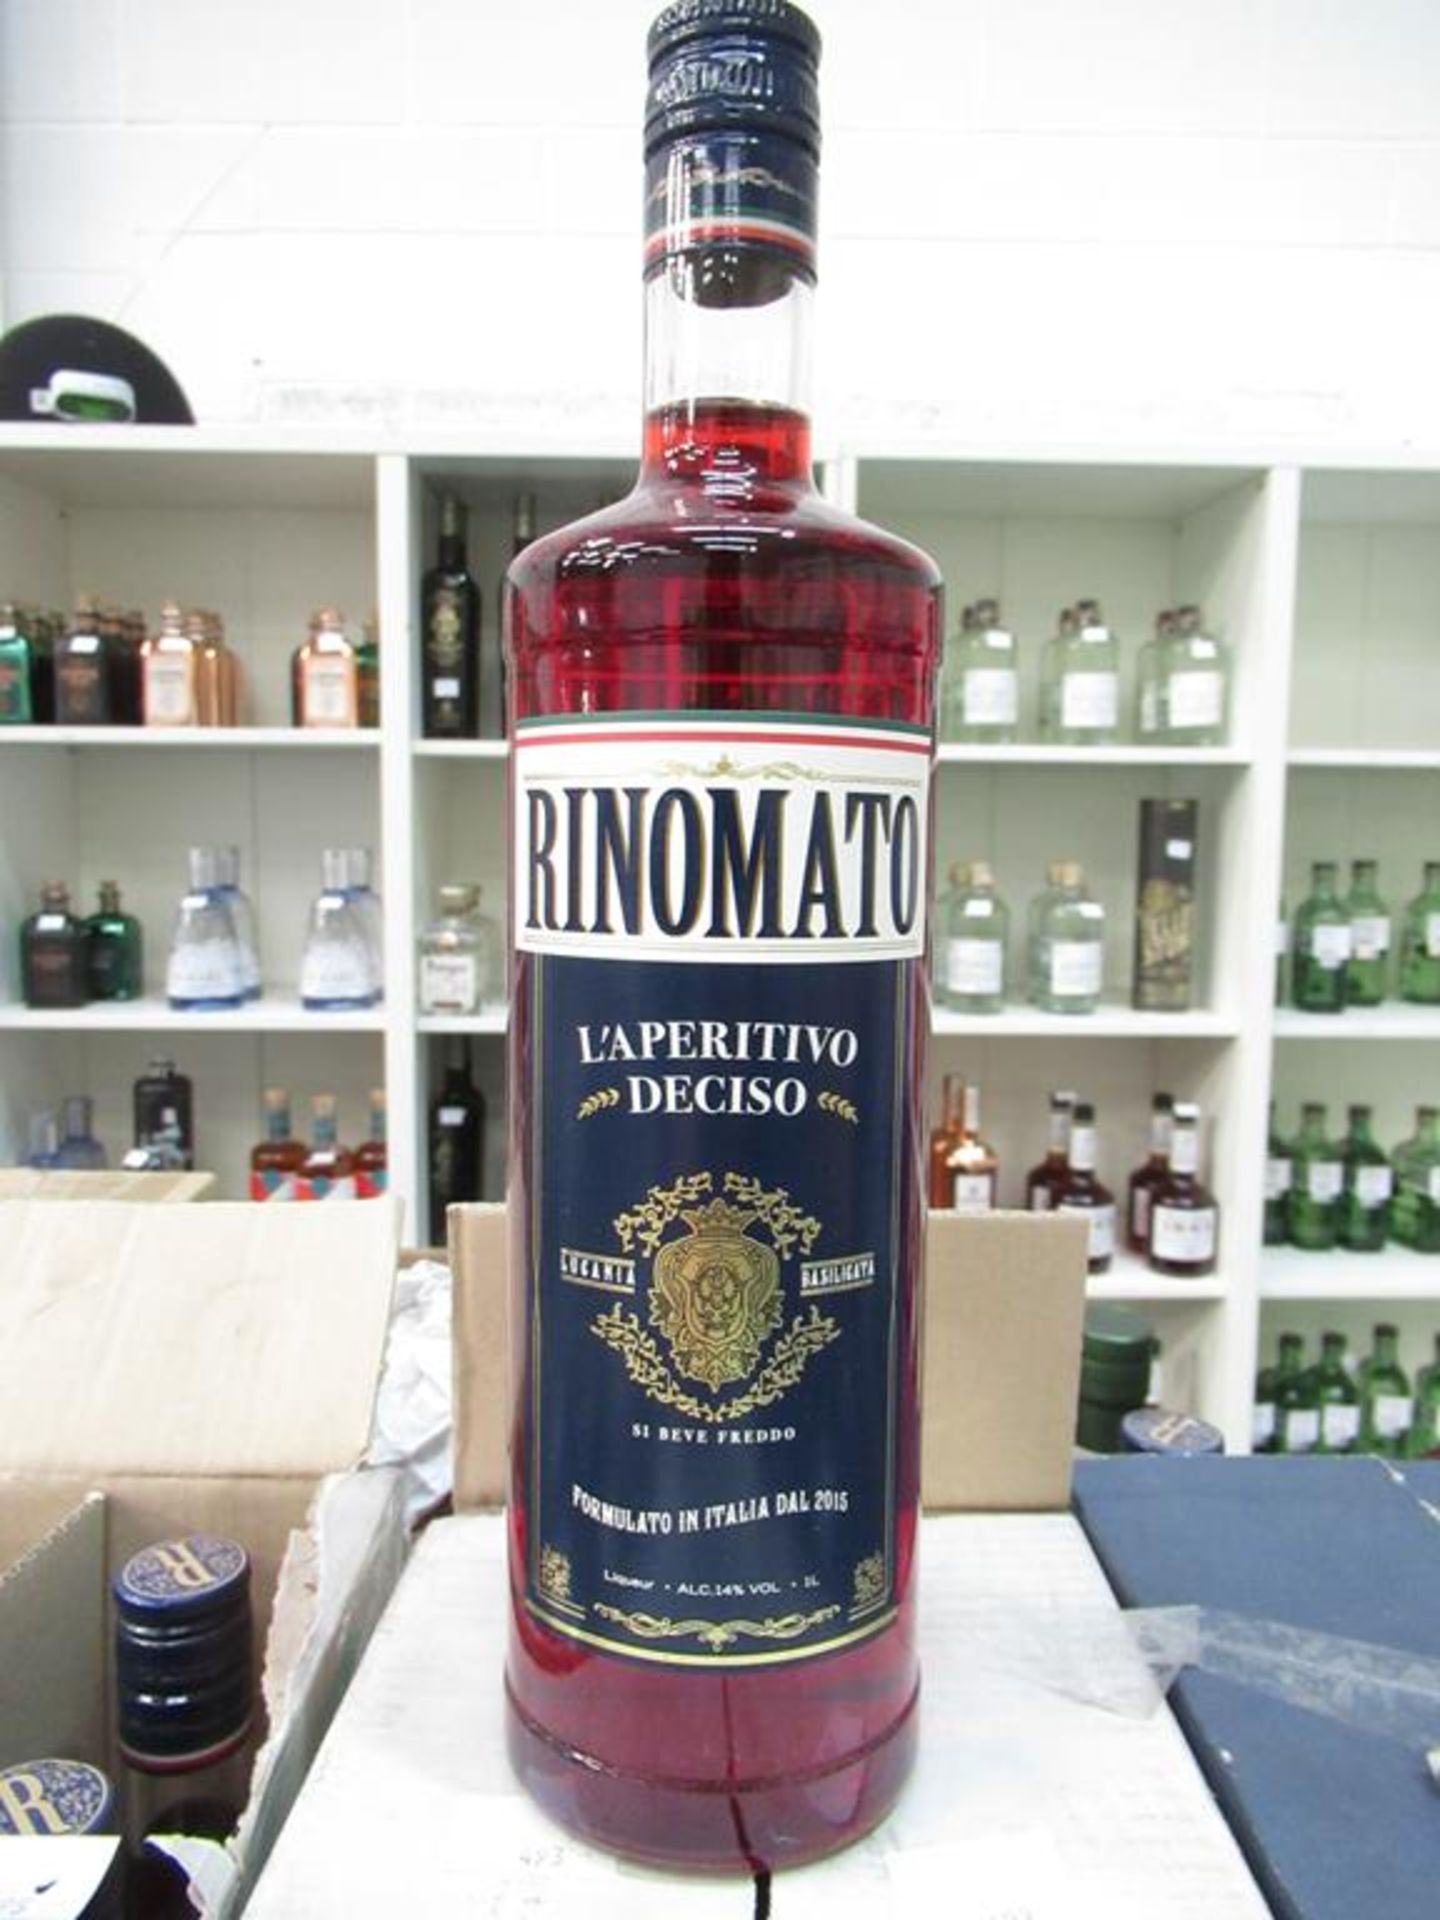 6 x bottles of Rinomato 'L'Aperitivo Deciso'